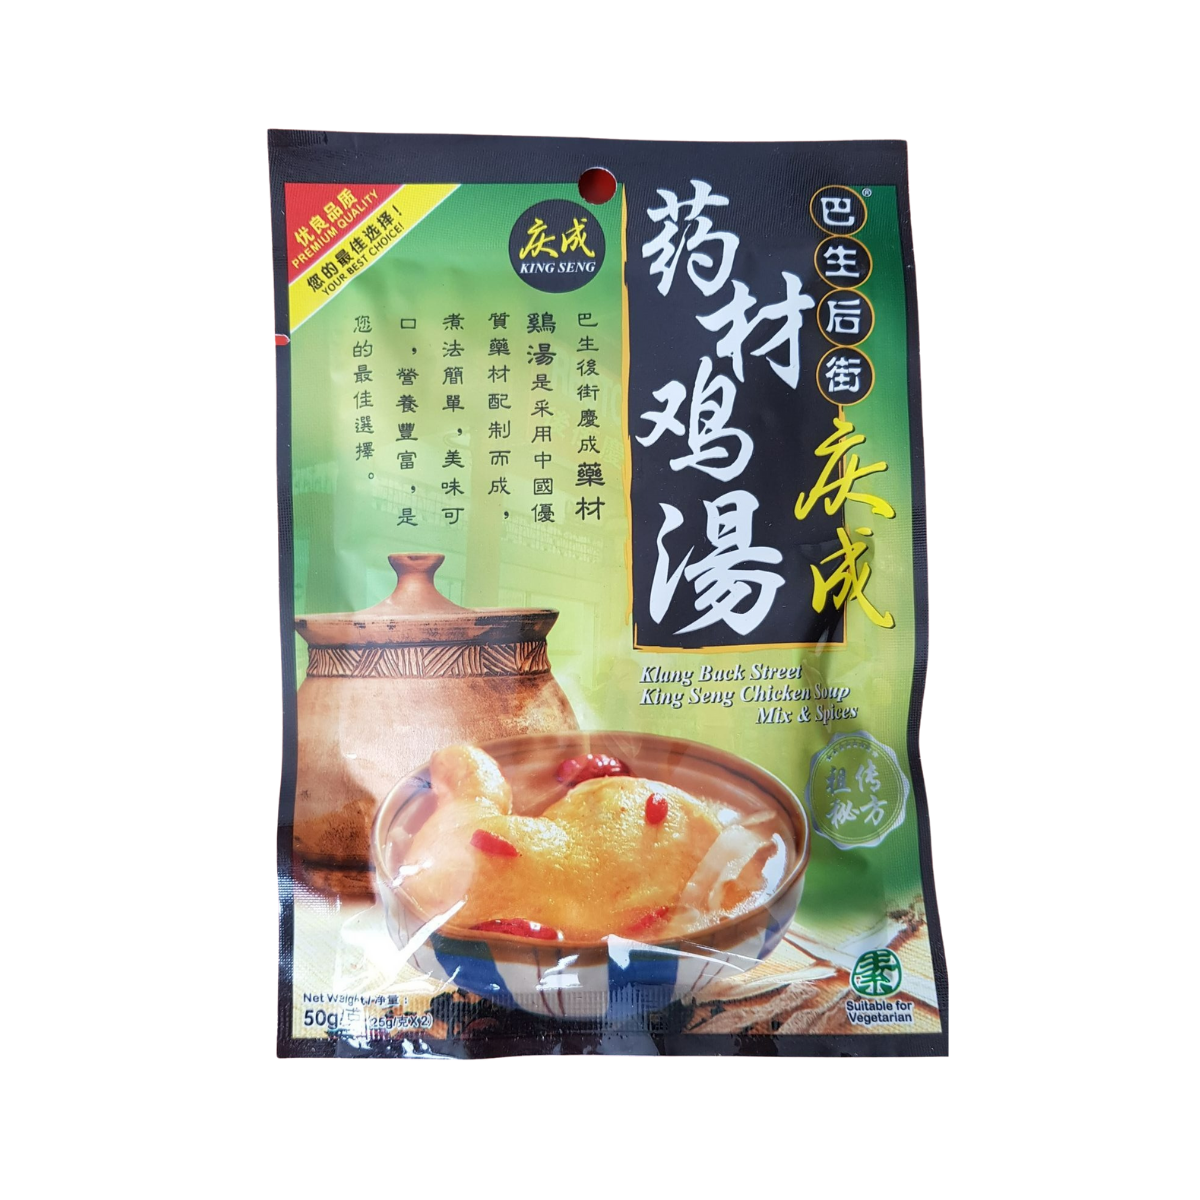 King Seng Chicken Soup Mix & Spices 50g